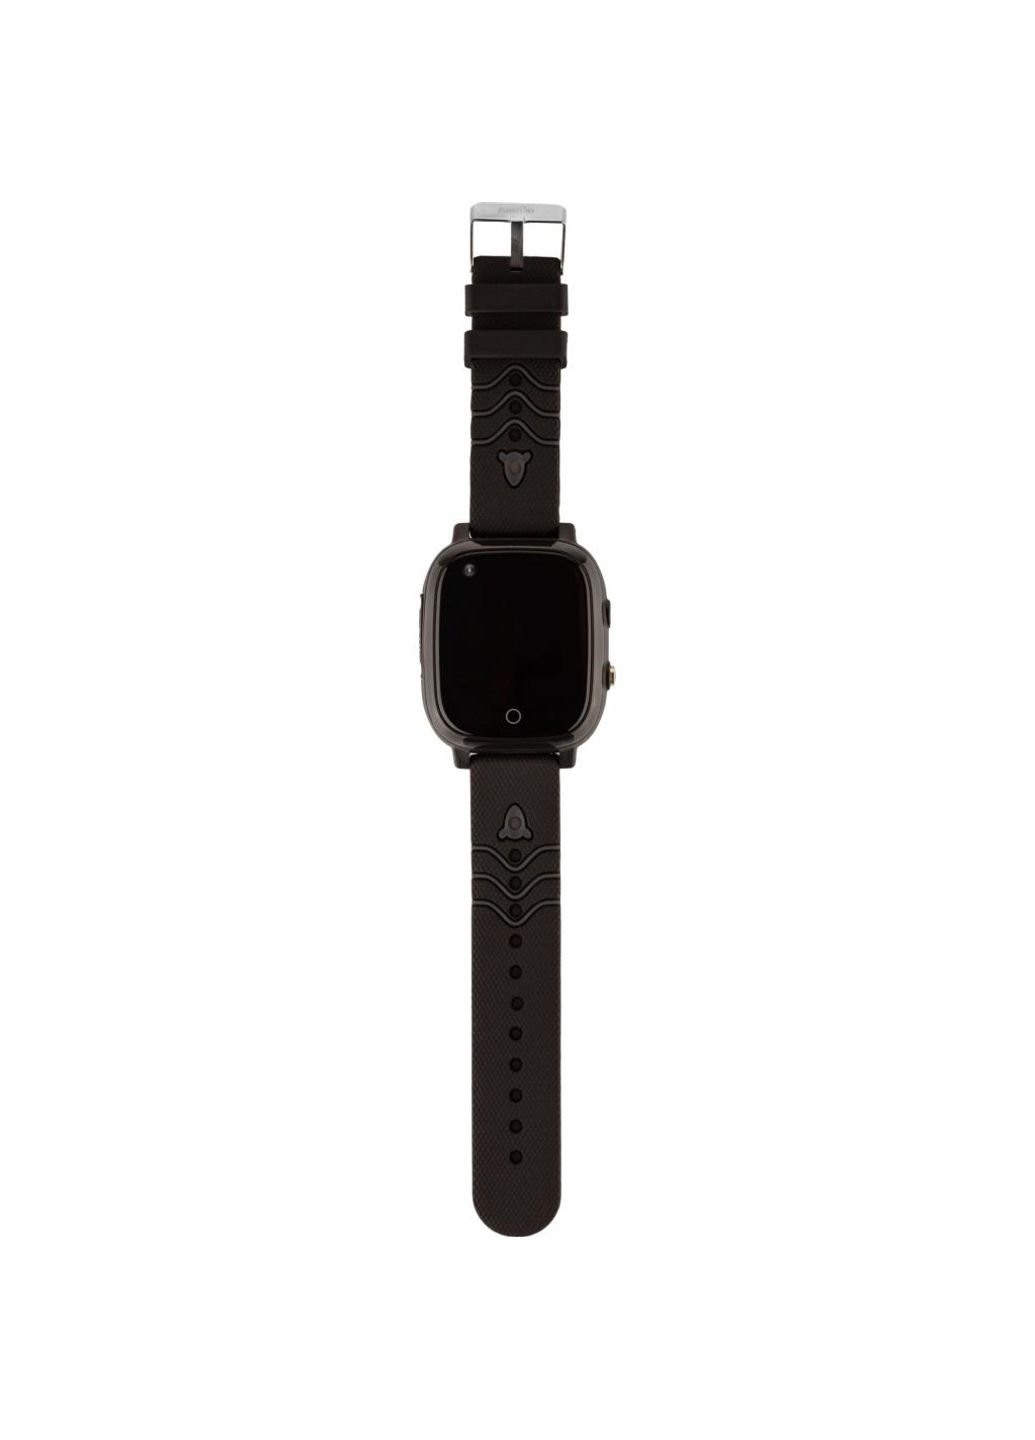 Смарт-часы GO005 4G WIFI Kids waterproof Thermometer Black (747016) Amigo (250096253)